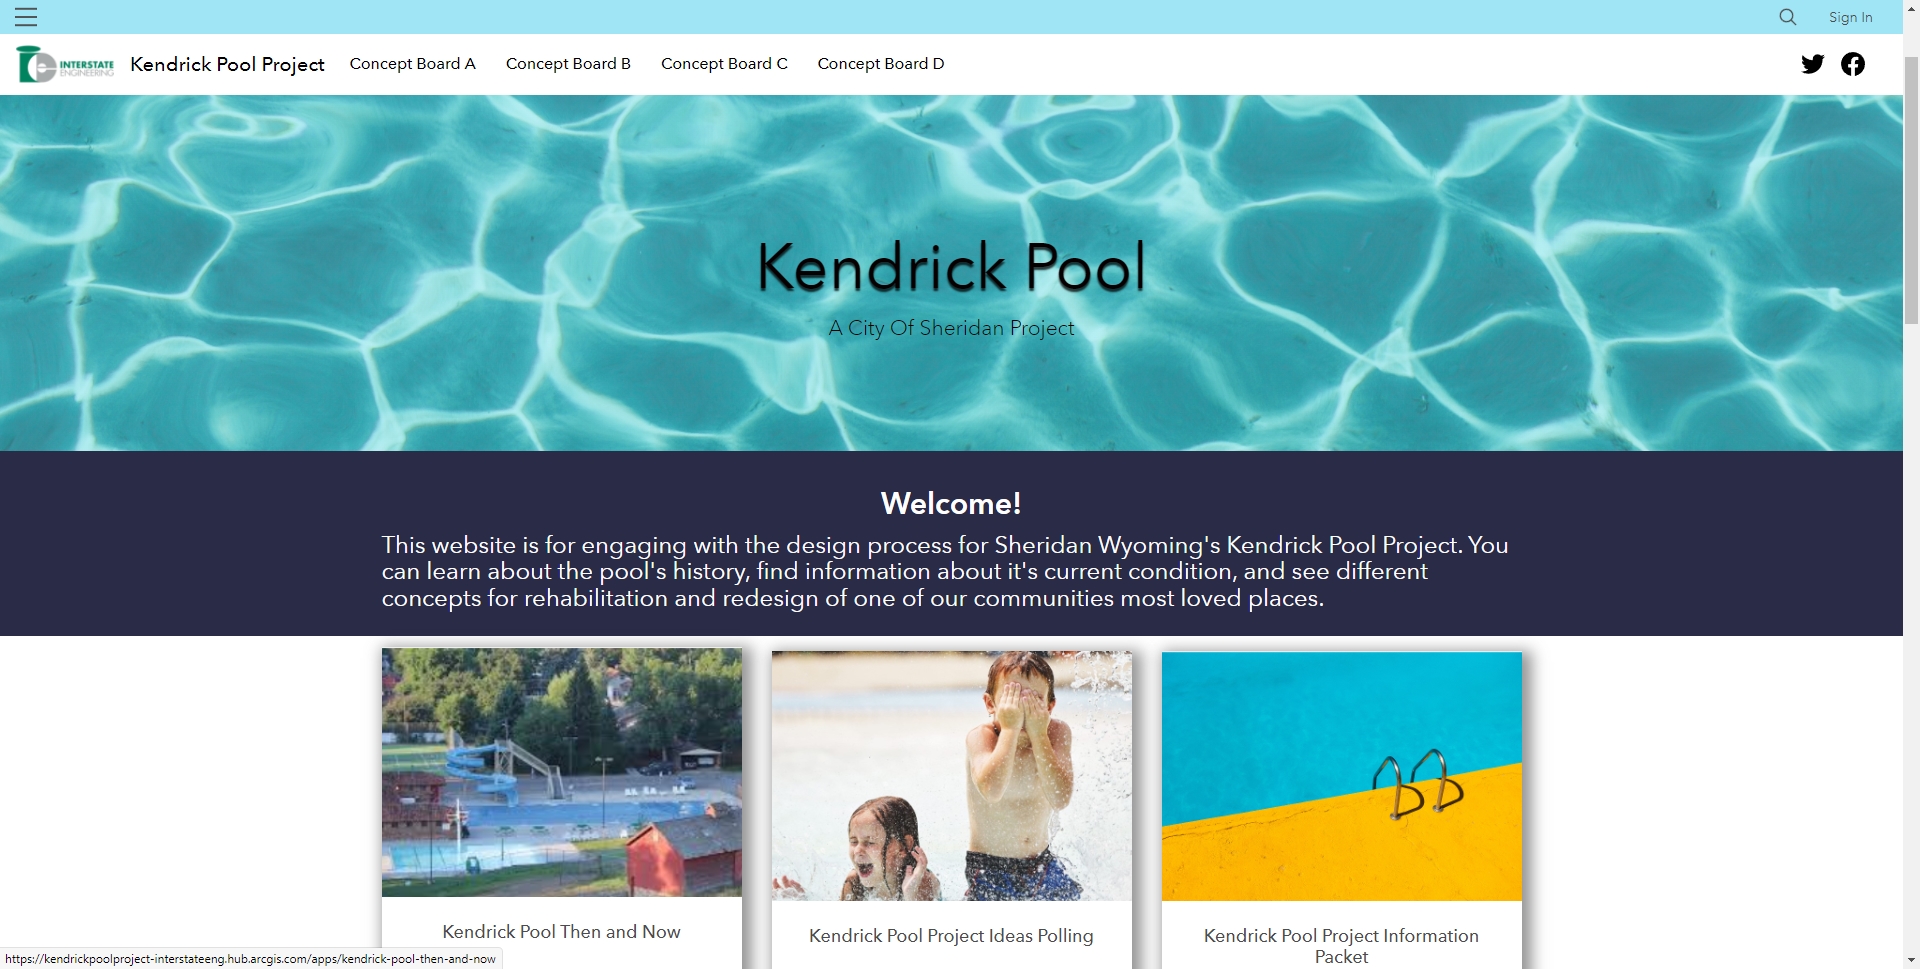 Kendrick Pool - Public Involvement using GIS, Jason Boucher